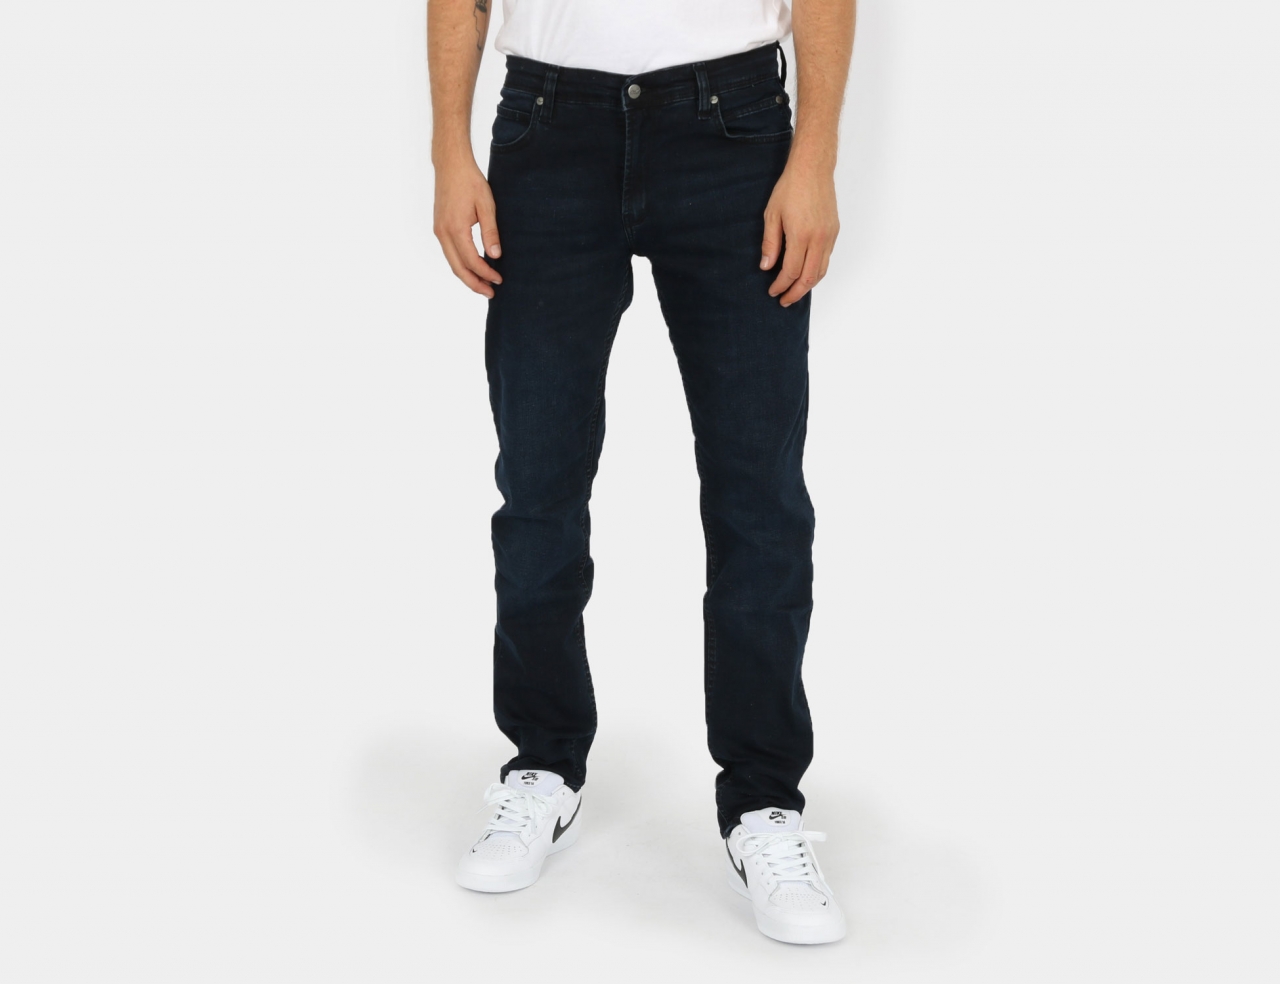 Reell Jeans Nova 2 Regular Straight Fit Jeans - Blue Black Wash